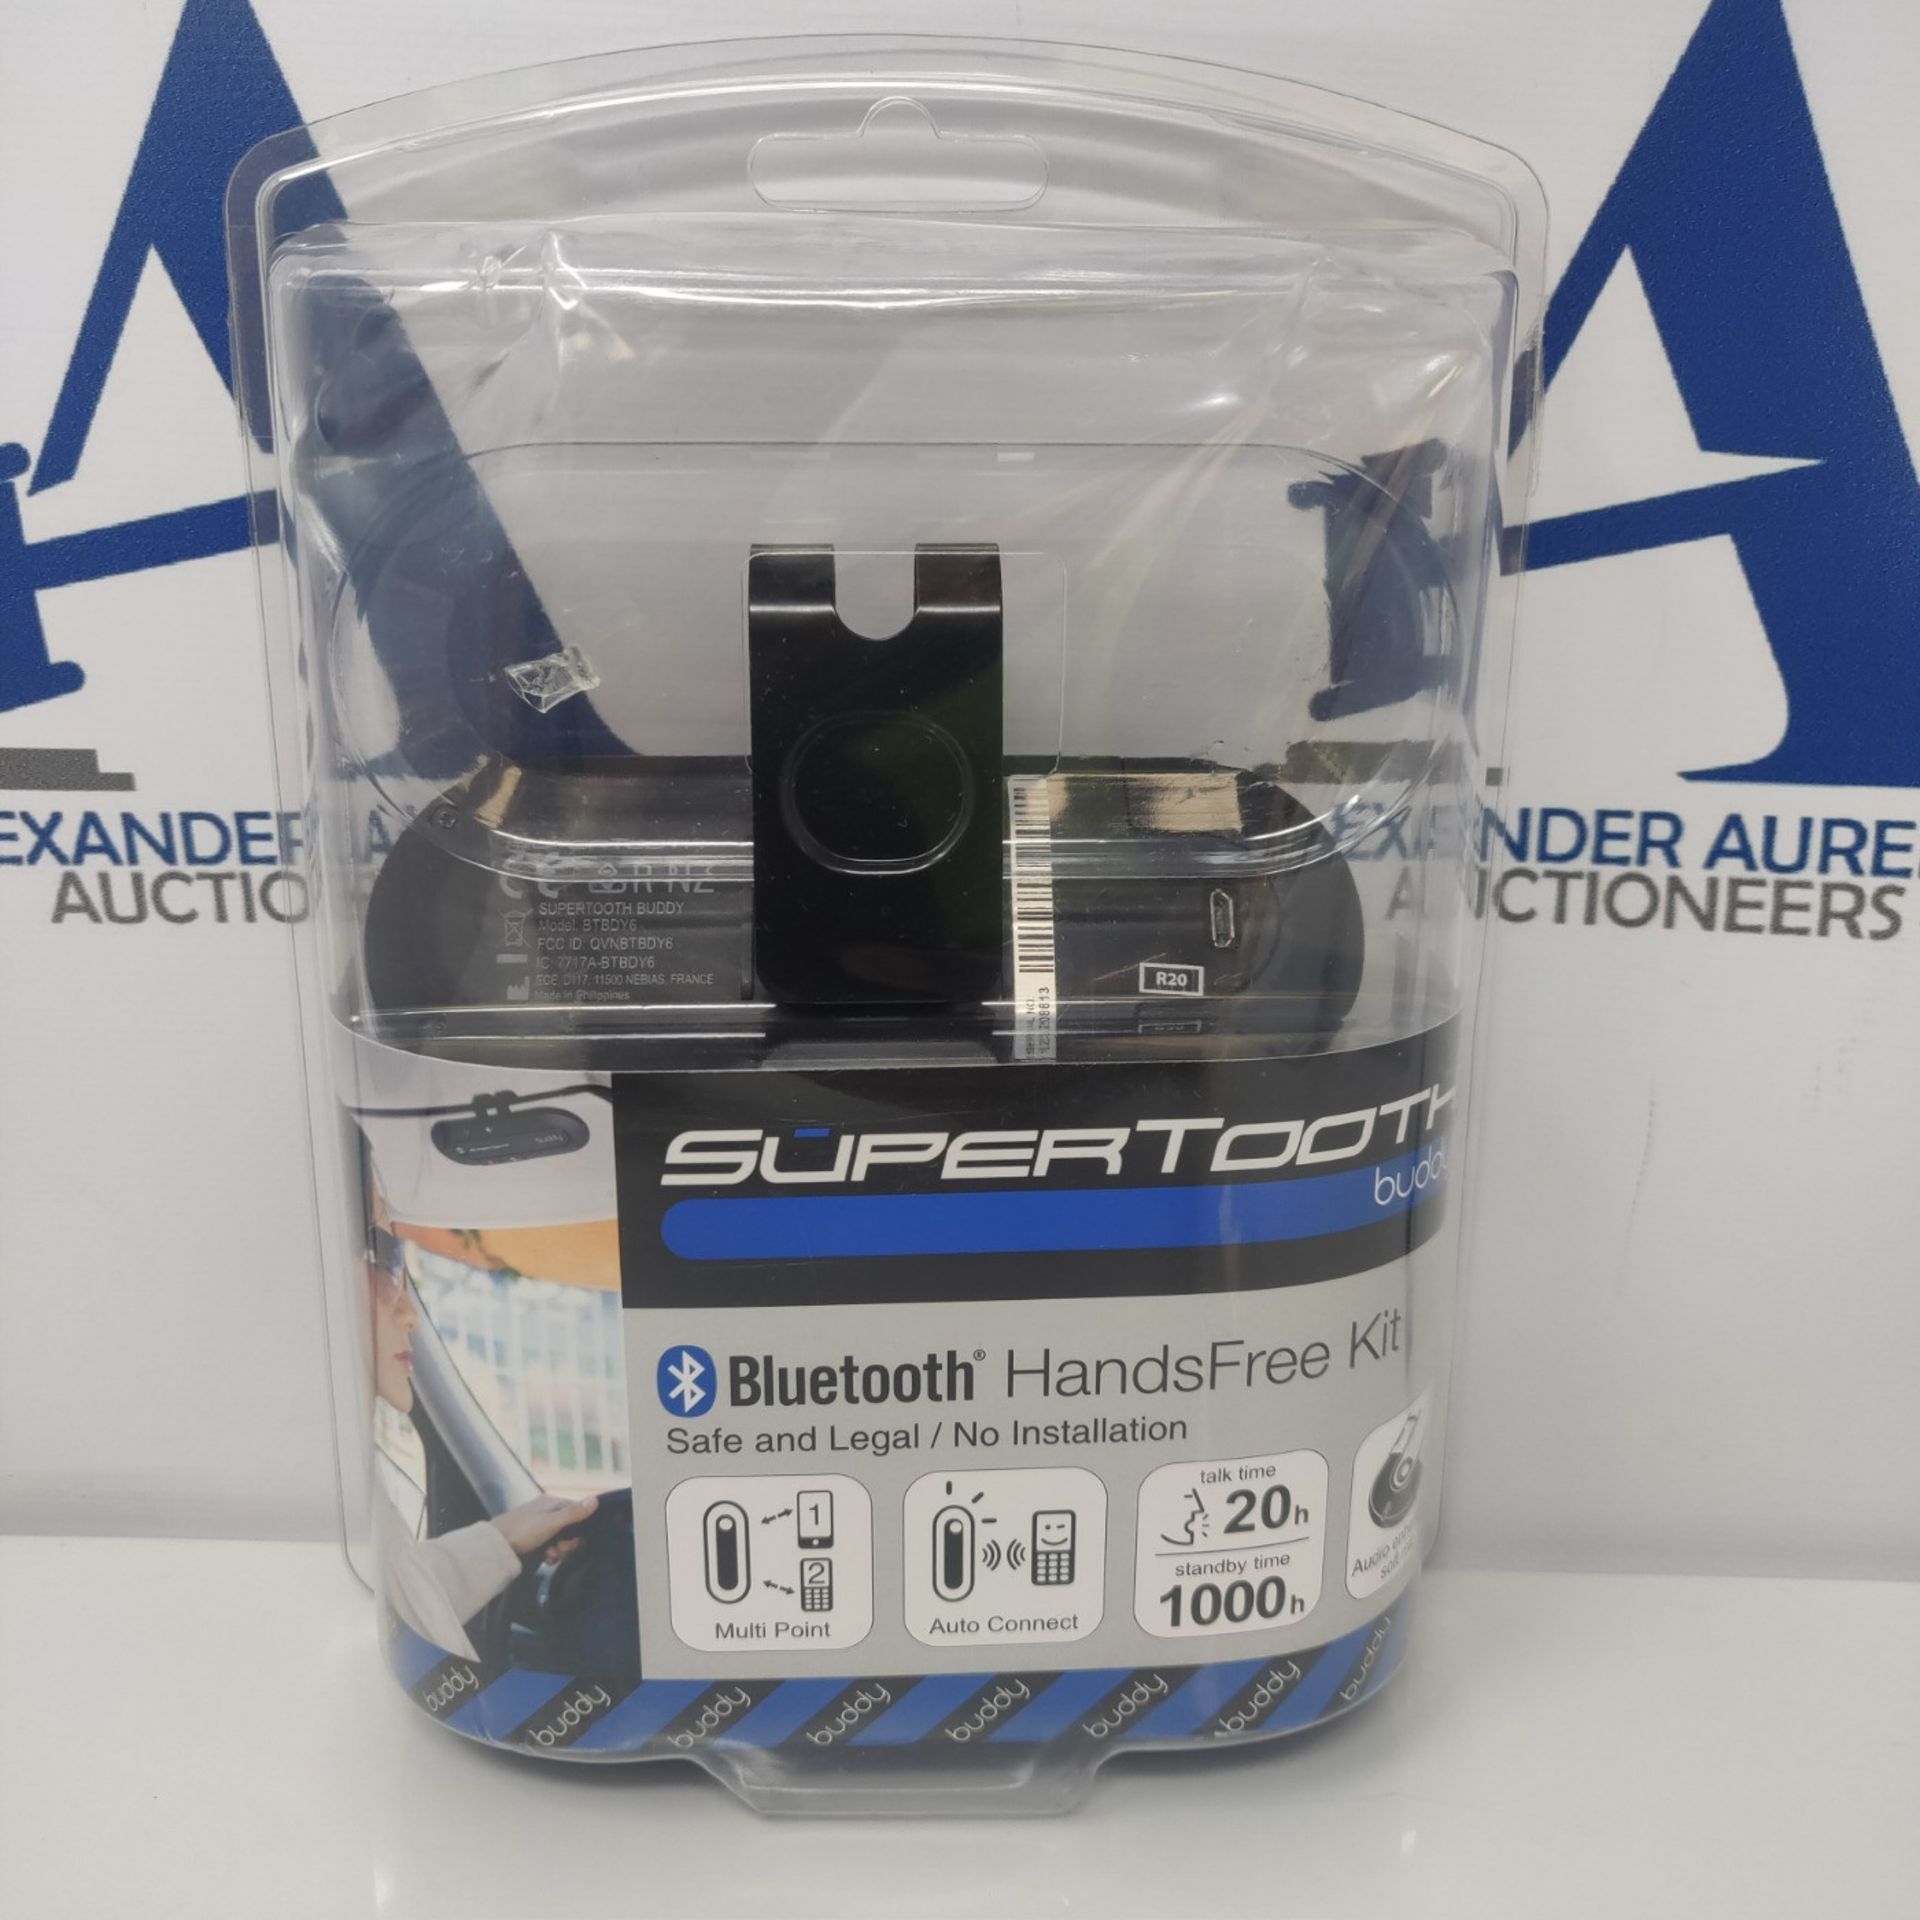 SuperTooth Buddy Bluetooth Handsfree Car Kit, Black - Image 2 of 3